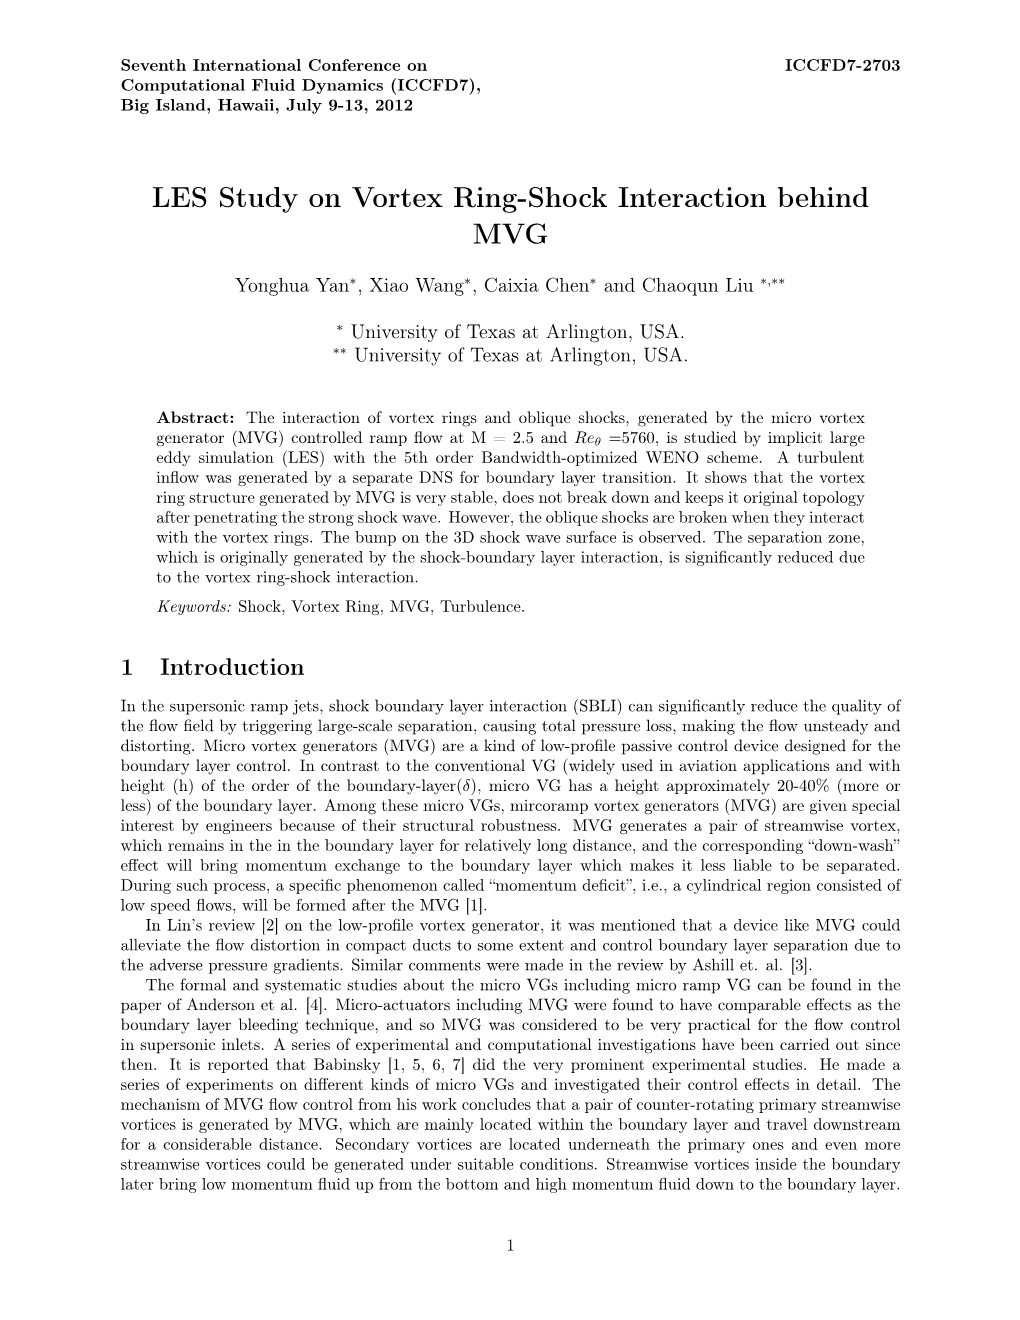 LES Study on Vortex Ring-Shock Interaction Behind MVG